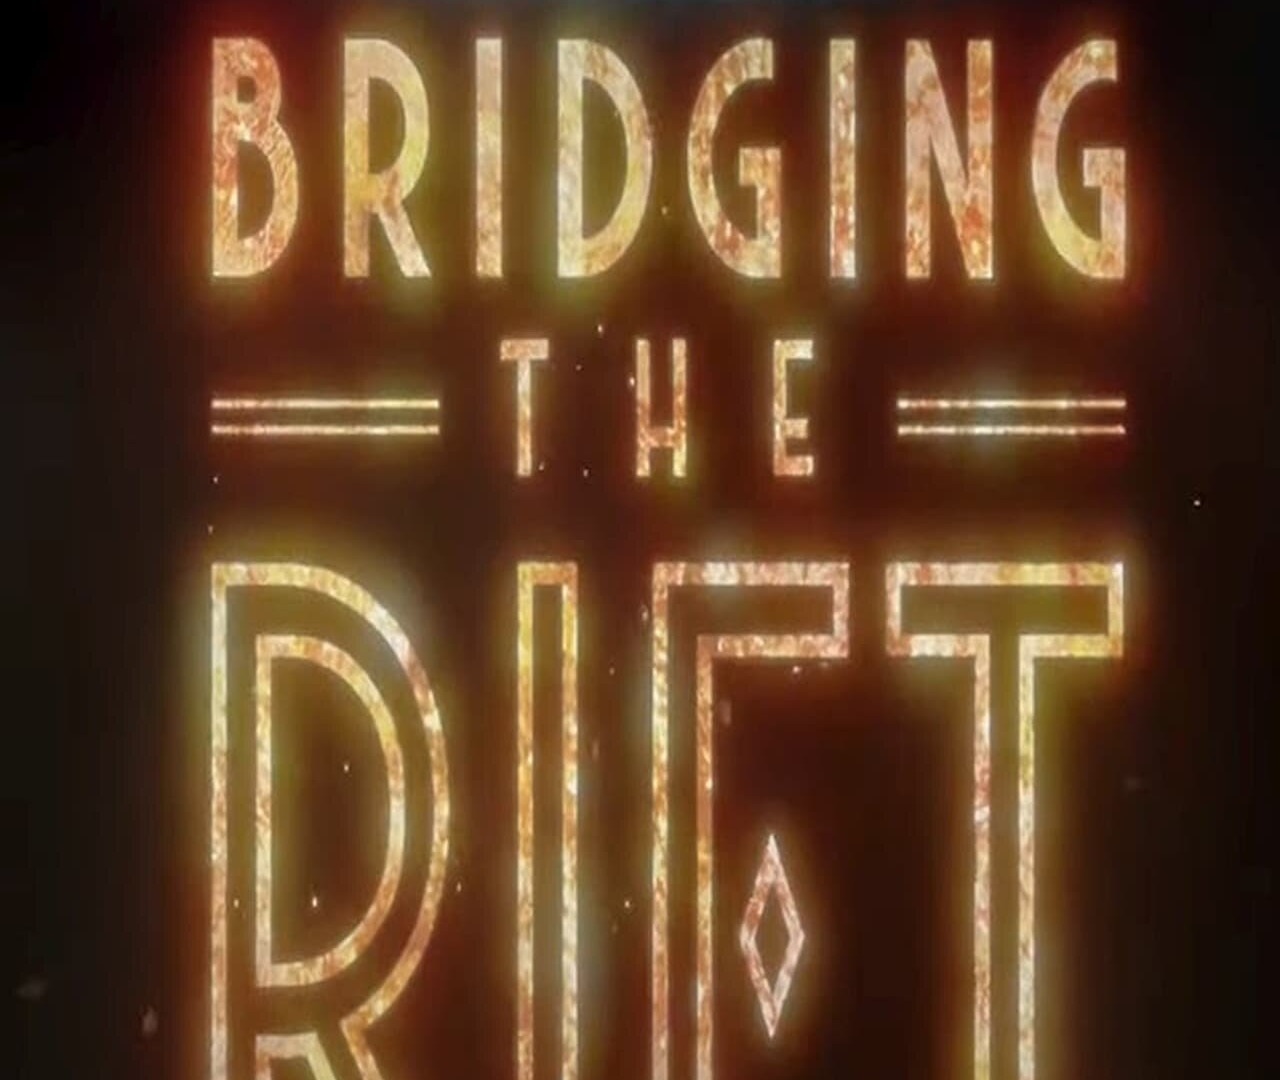 Show Arcane: Bridging the Rift